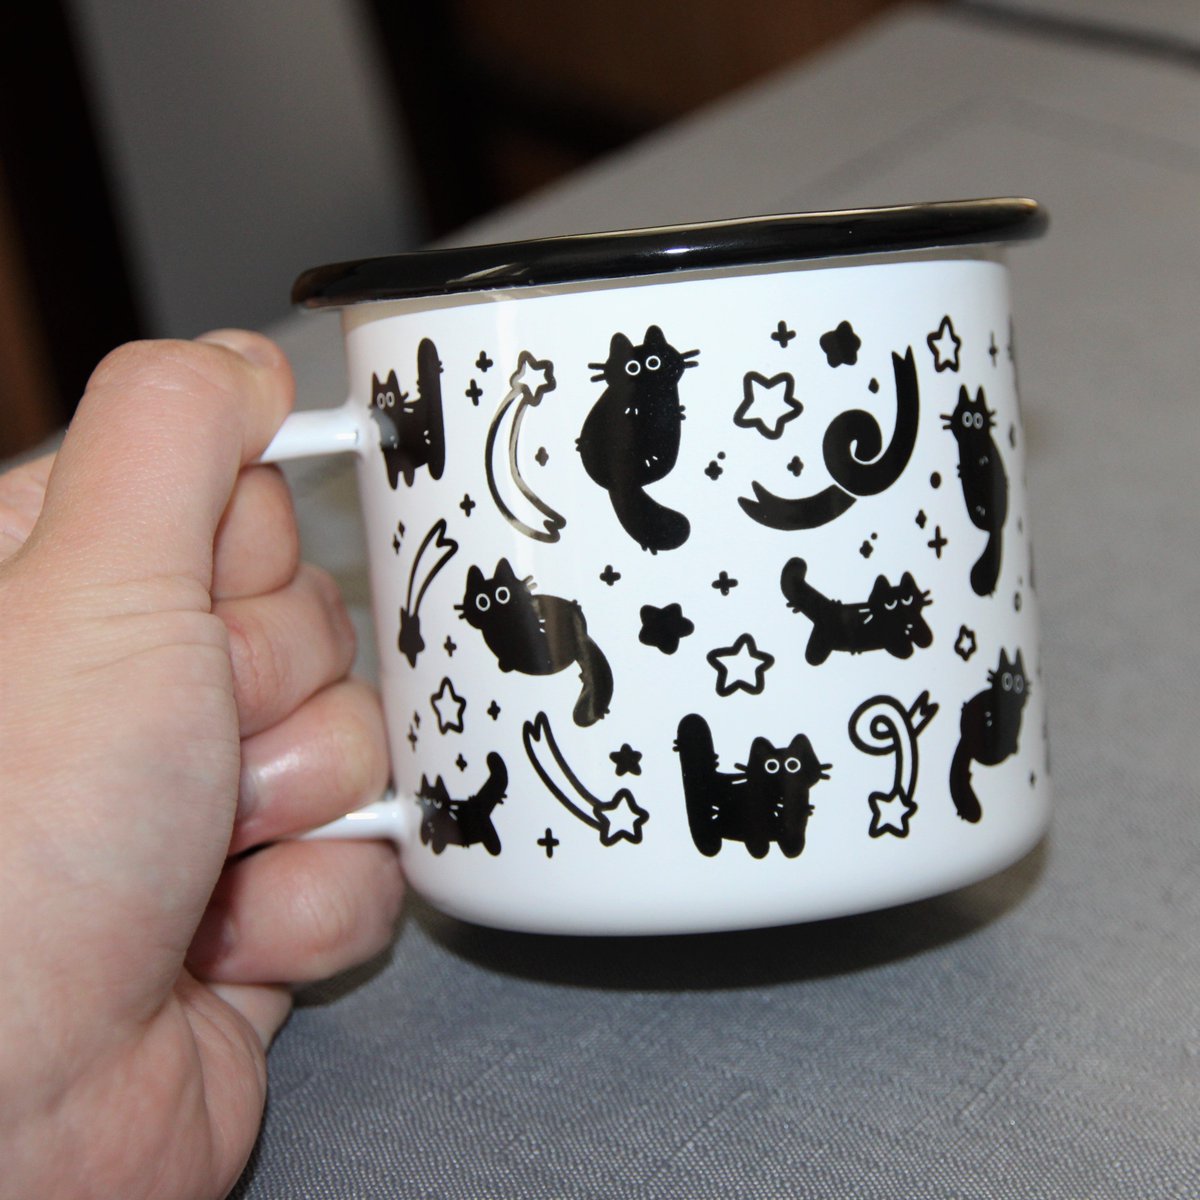 I got more black cat mugs!